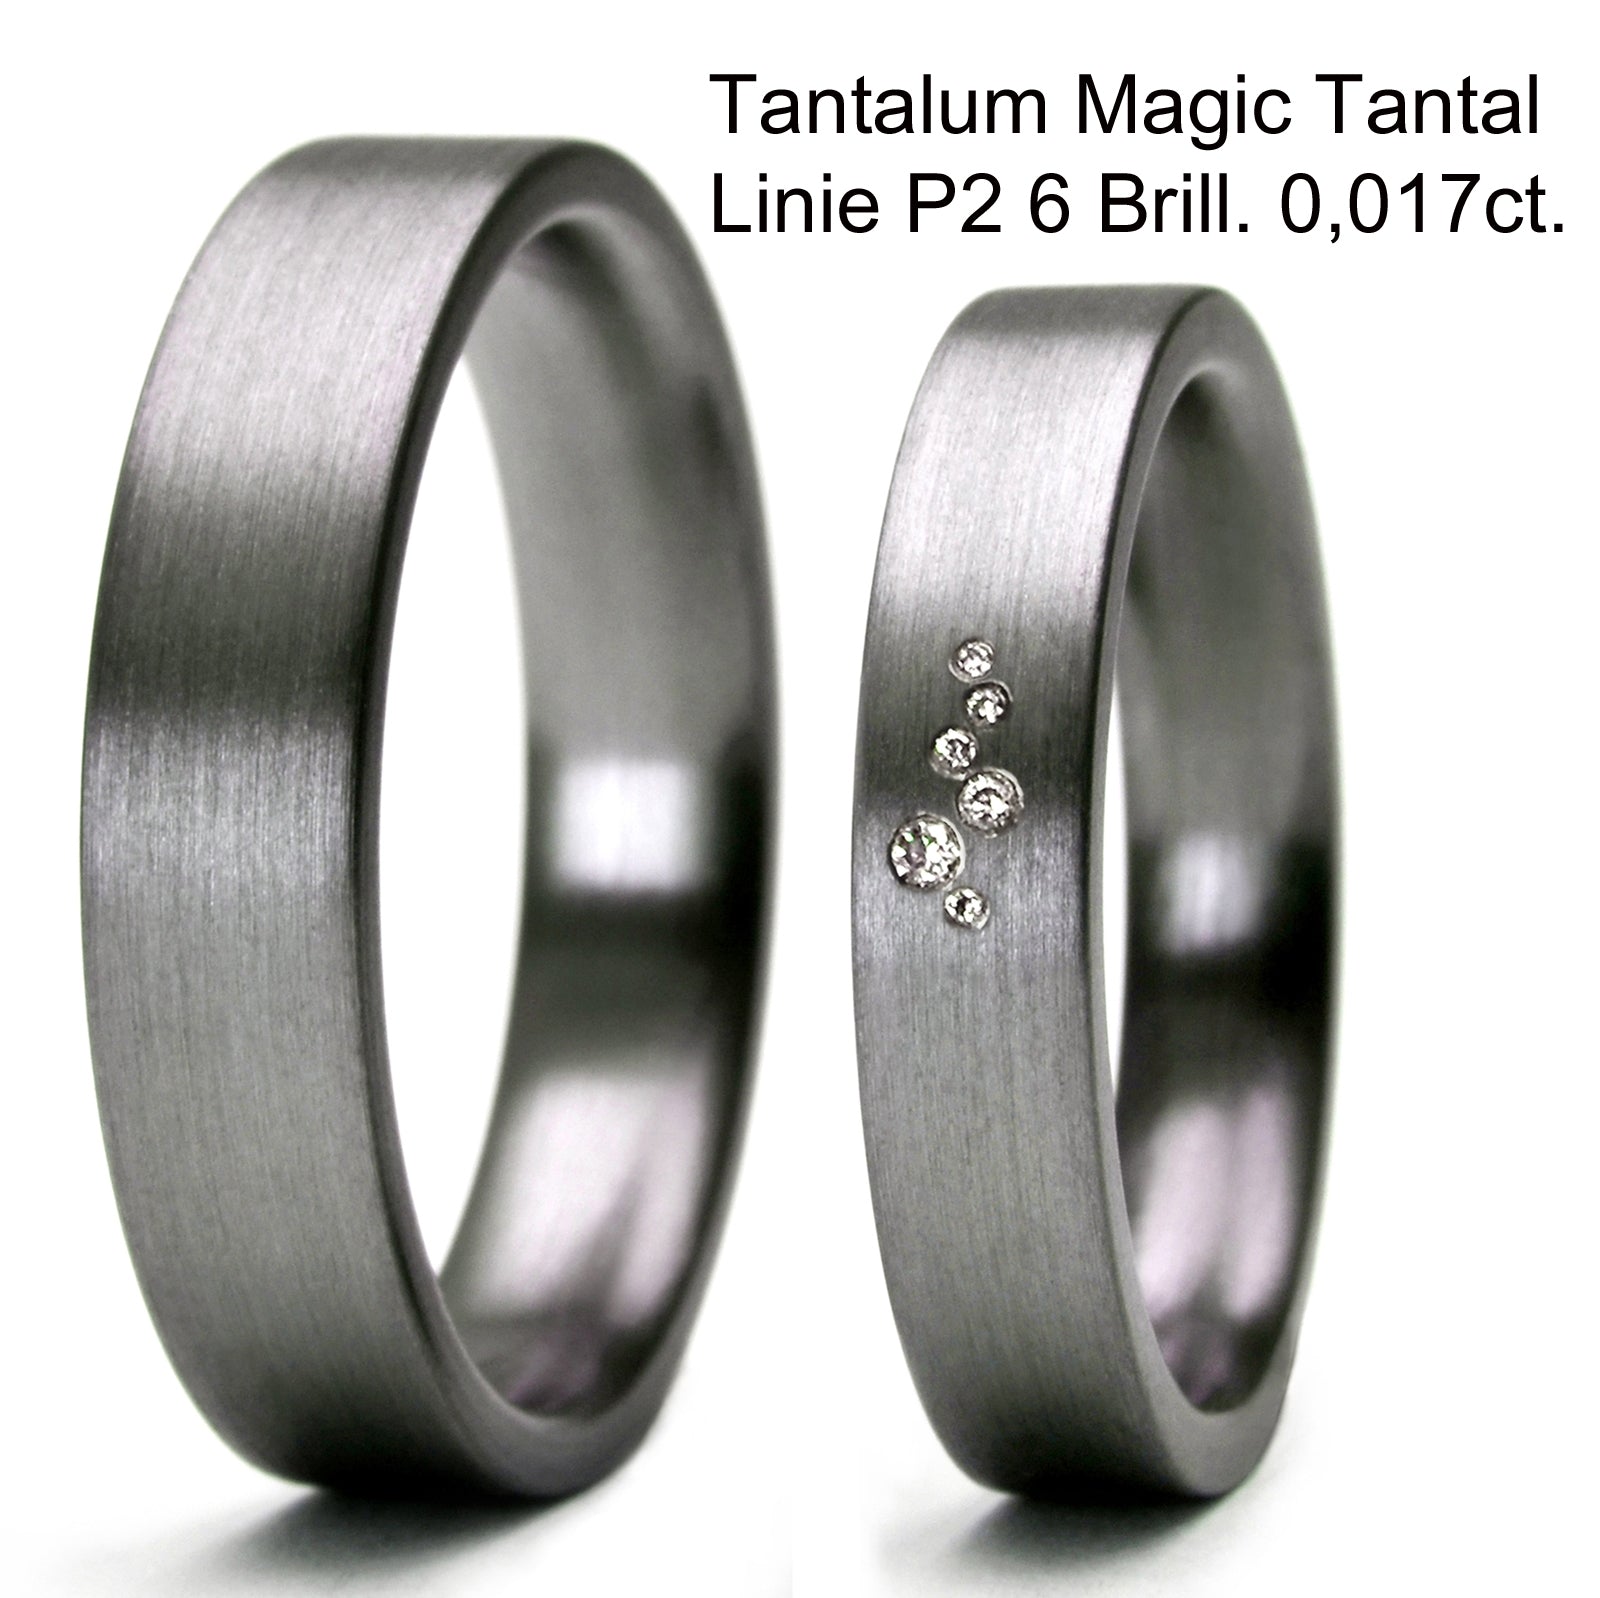 Tantalum Magic Tantal Eheringe Linie P2 6 Brill. 0,017ct..jpg